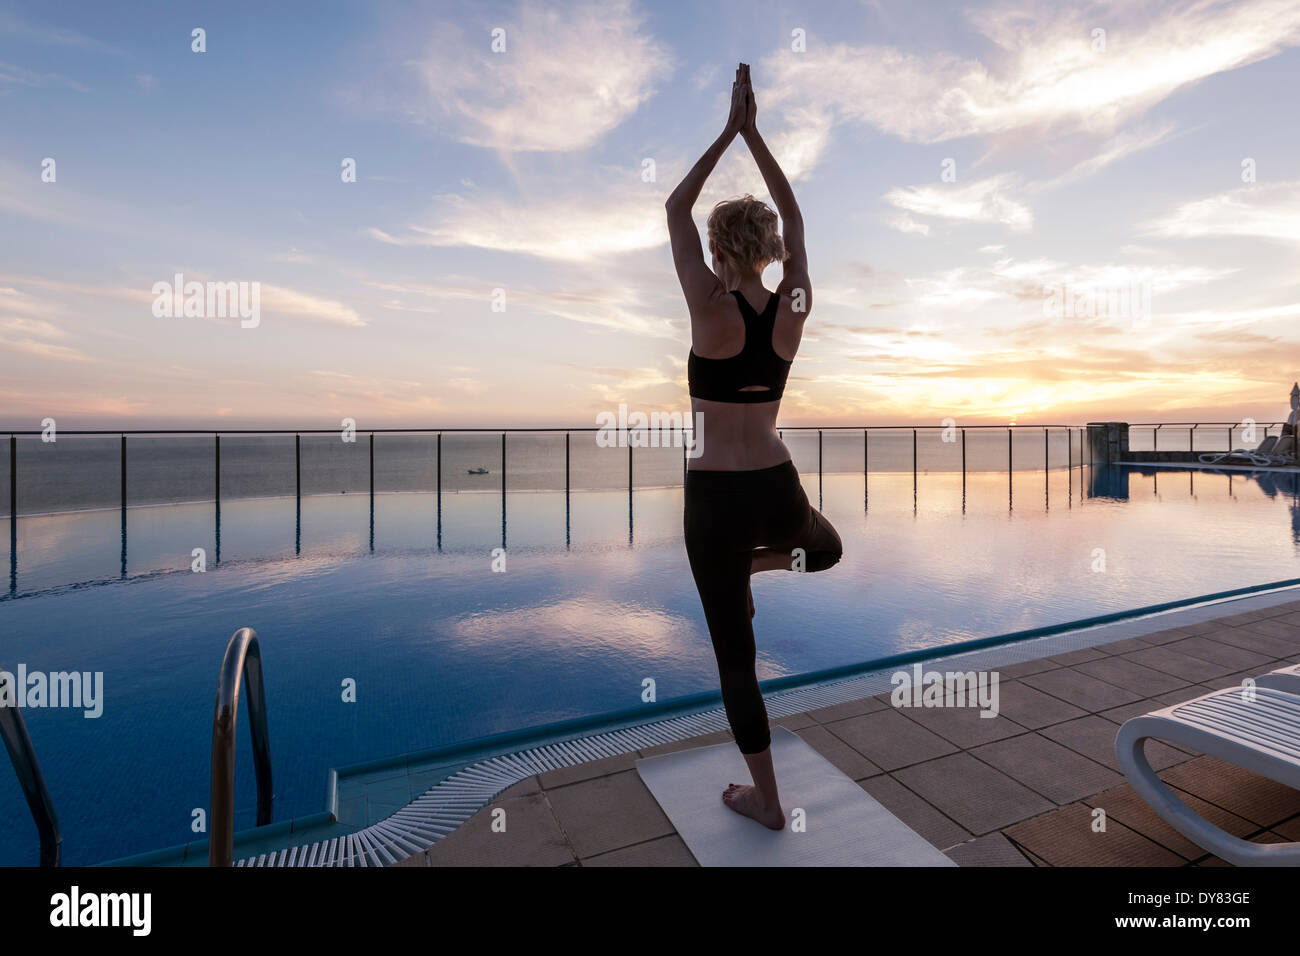 Frau Yoga zu praktizieren Stockfoto